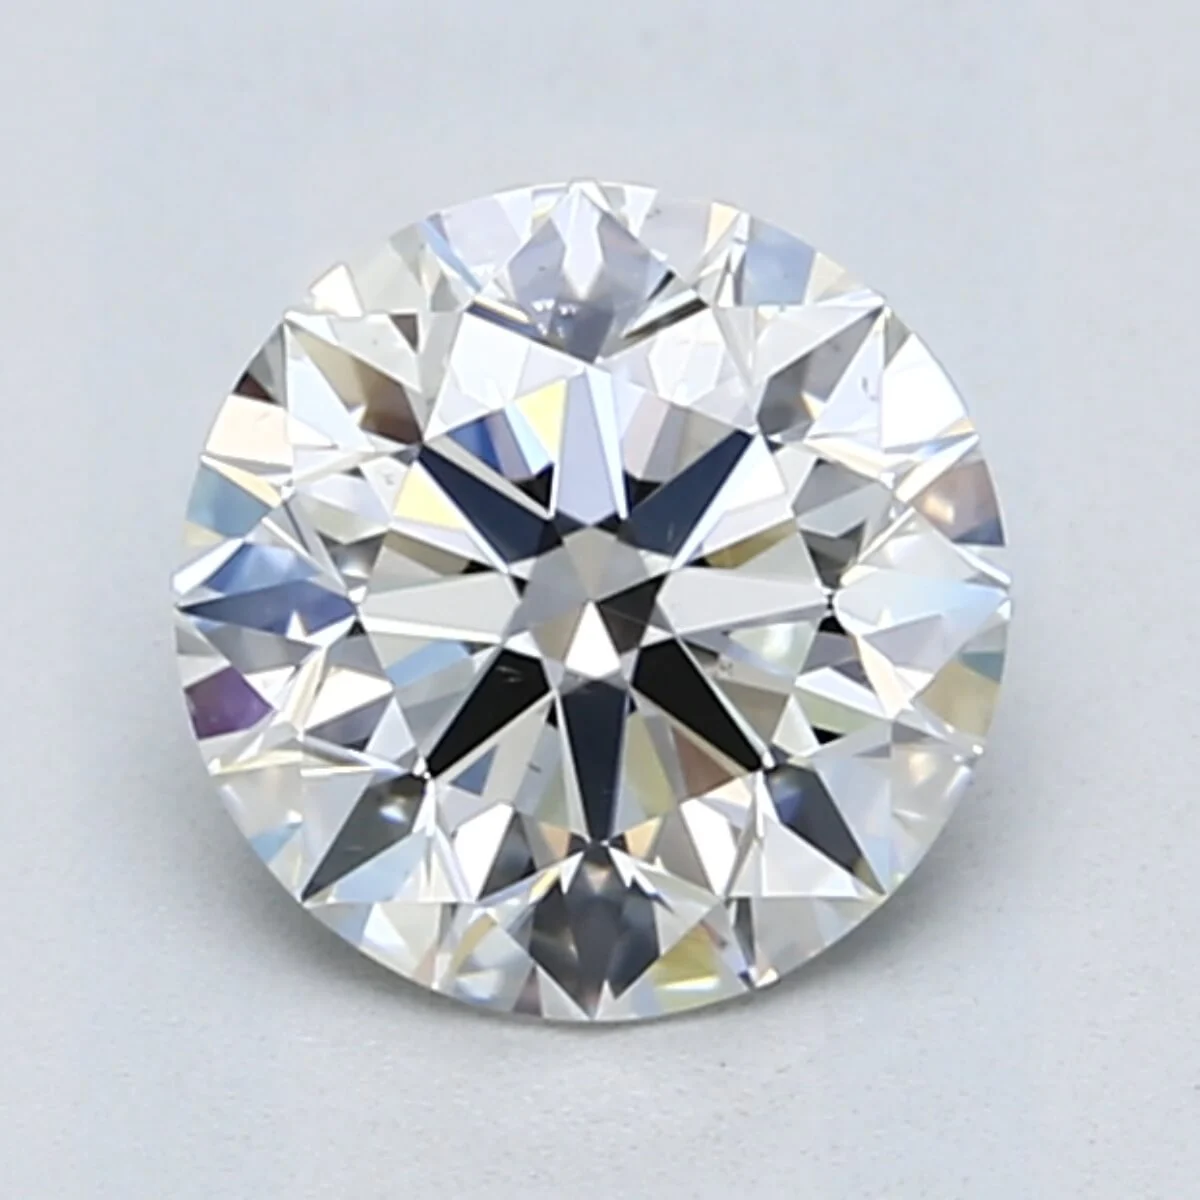 1.5 carat diamond G color VS1 clarity